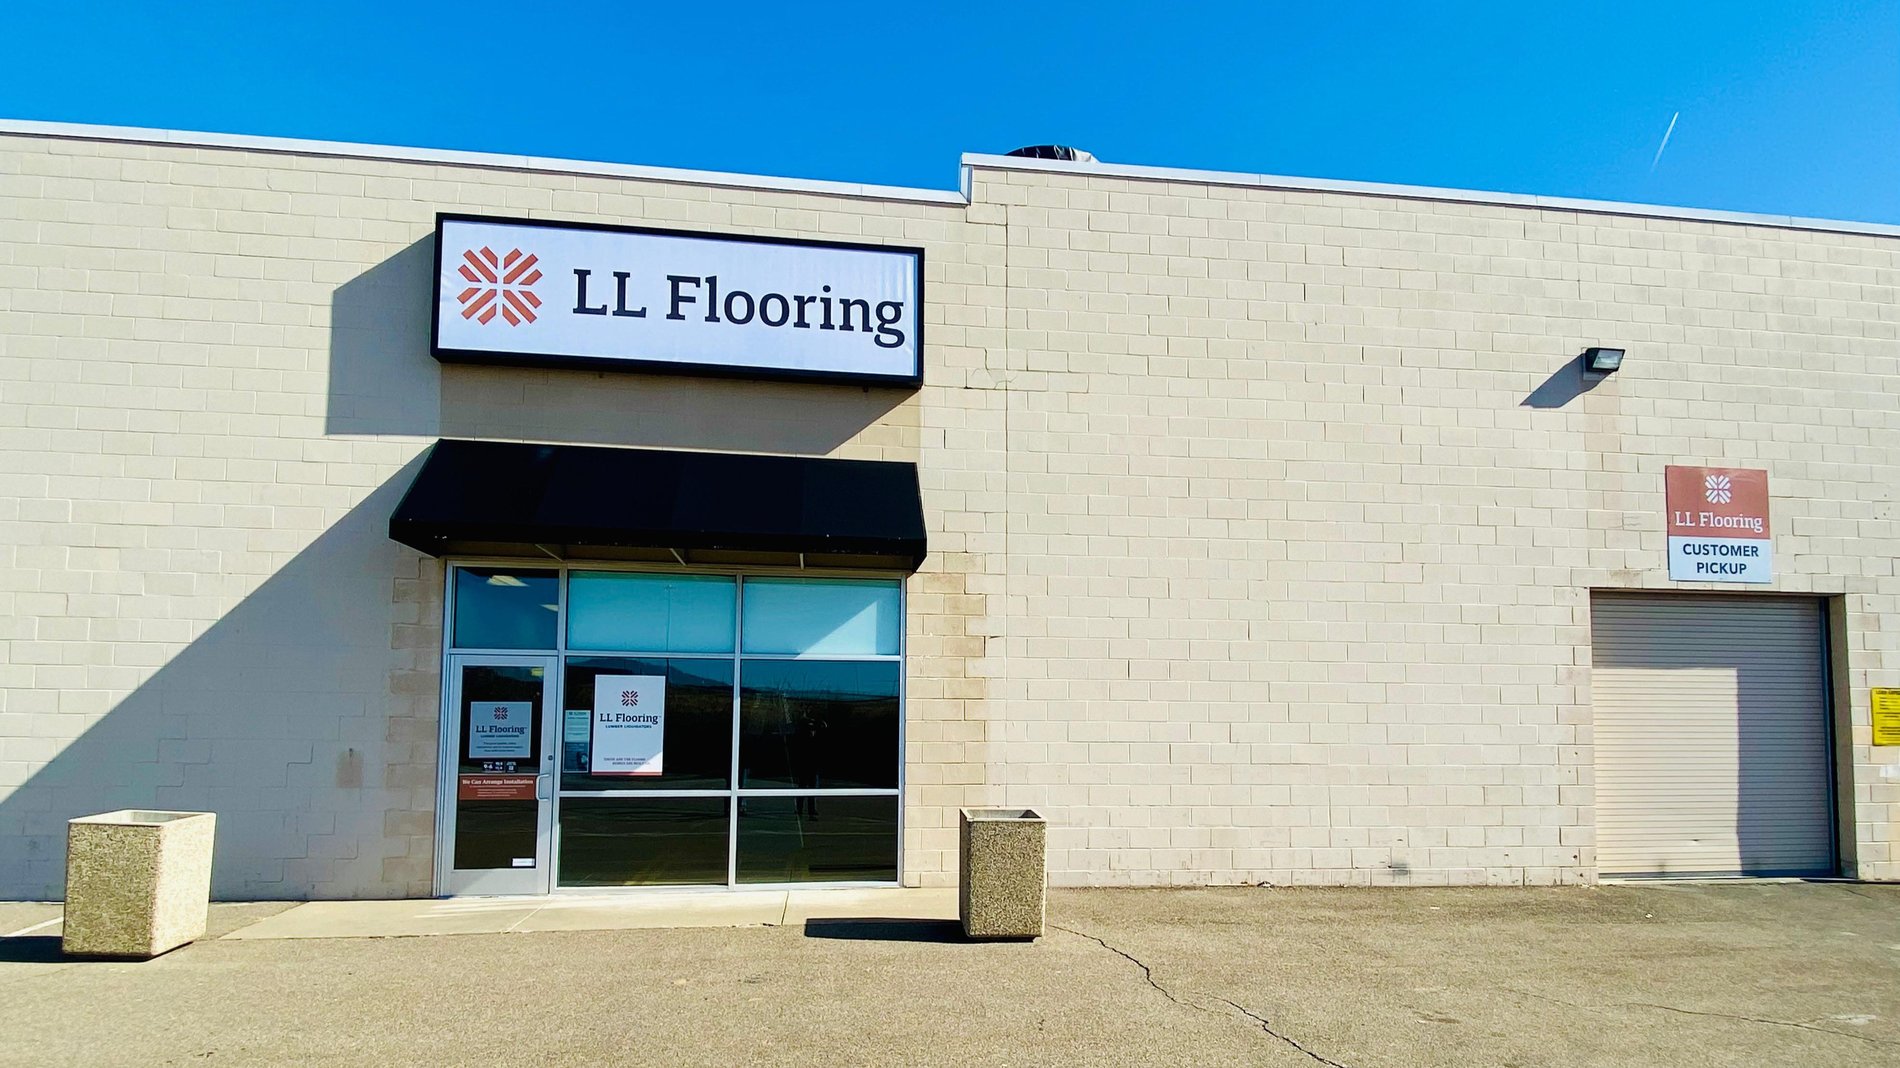 LL Flooring #1246 Johnson City | 416 Harry L Dr | Storefront